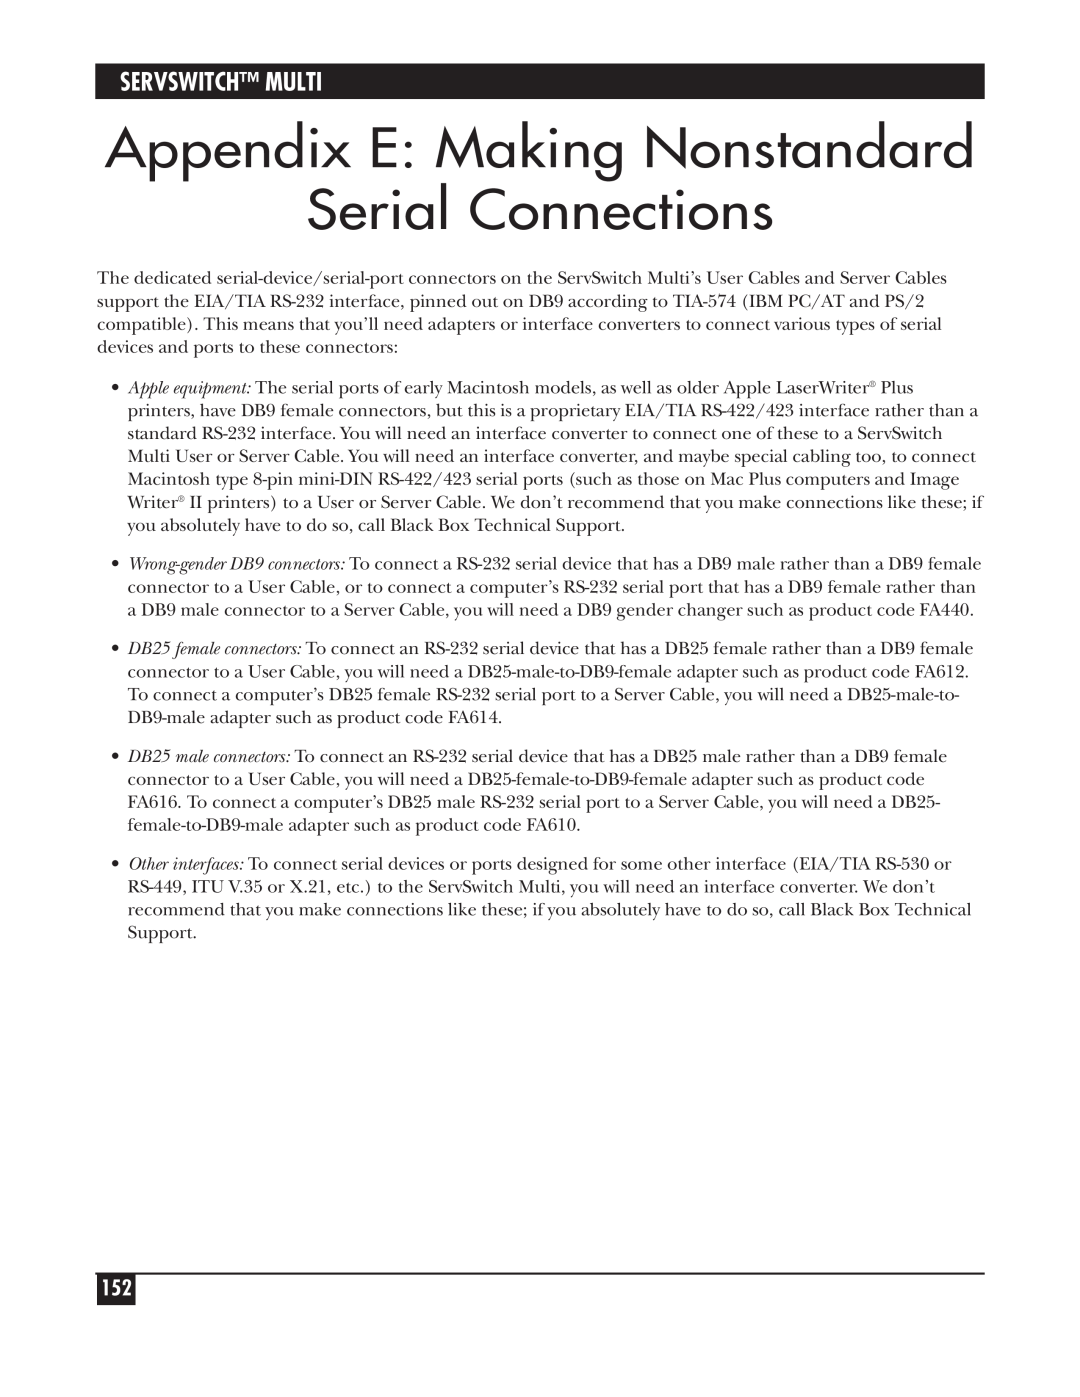 Black Box KV162A manual Appendix E Making Nonstandard Serial Connections, Servswitch Multi 